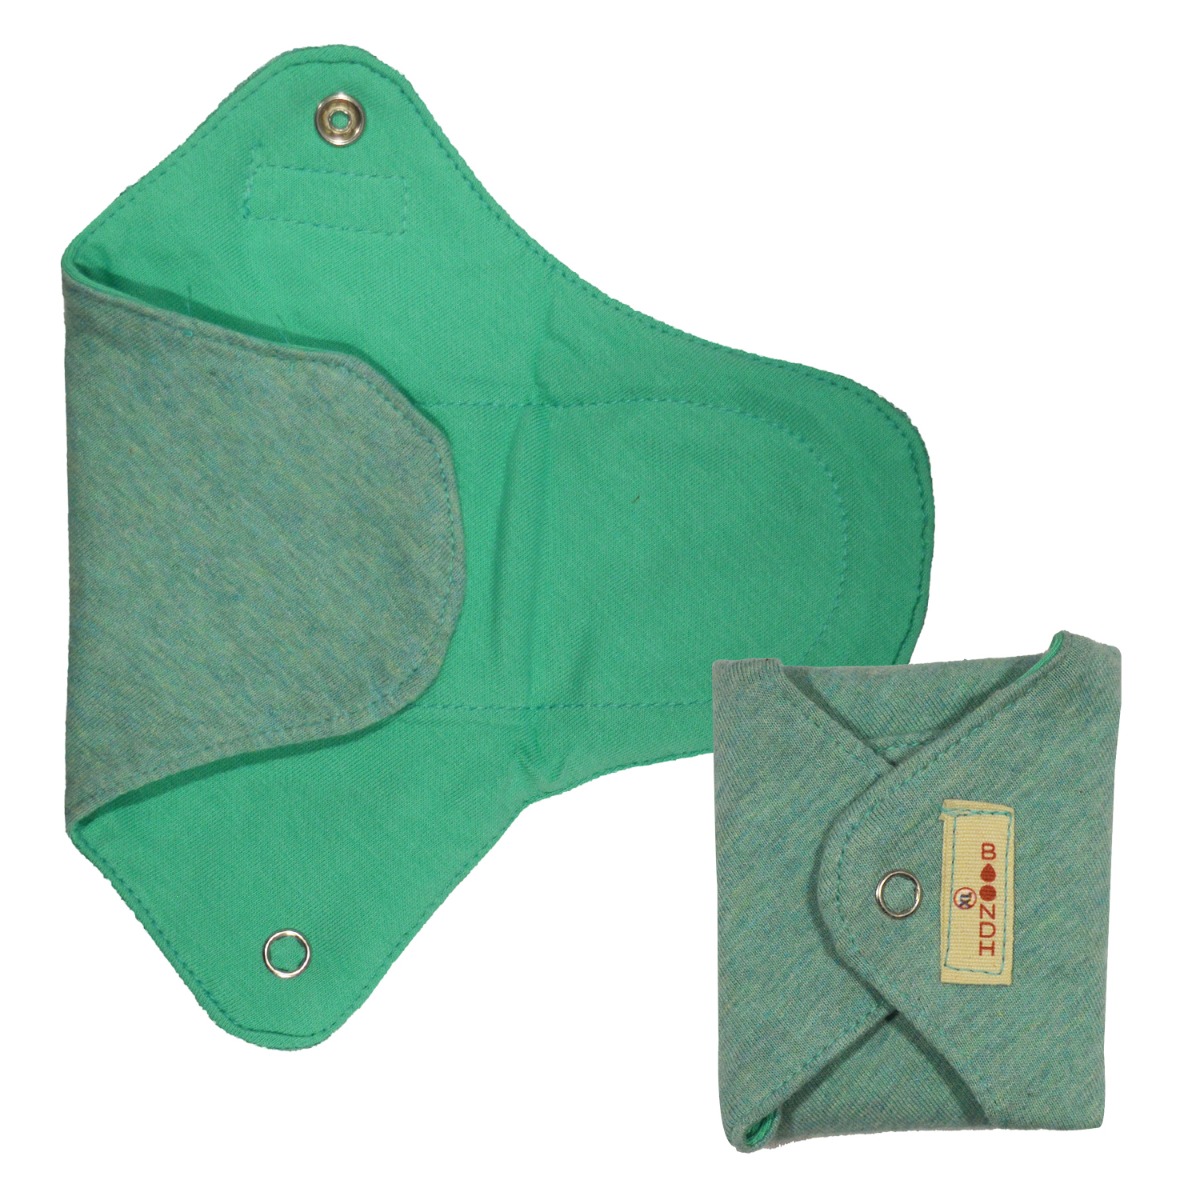 Boondh Cloth Pad: Extra Large Size - Aqua Teal